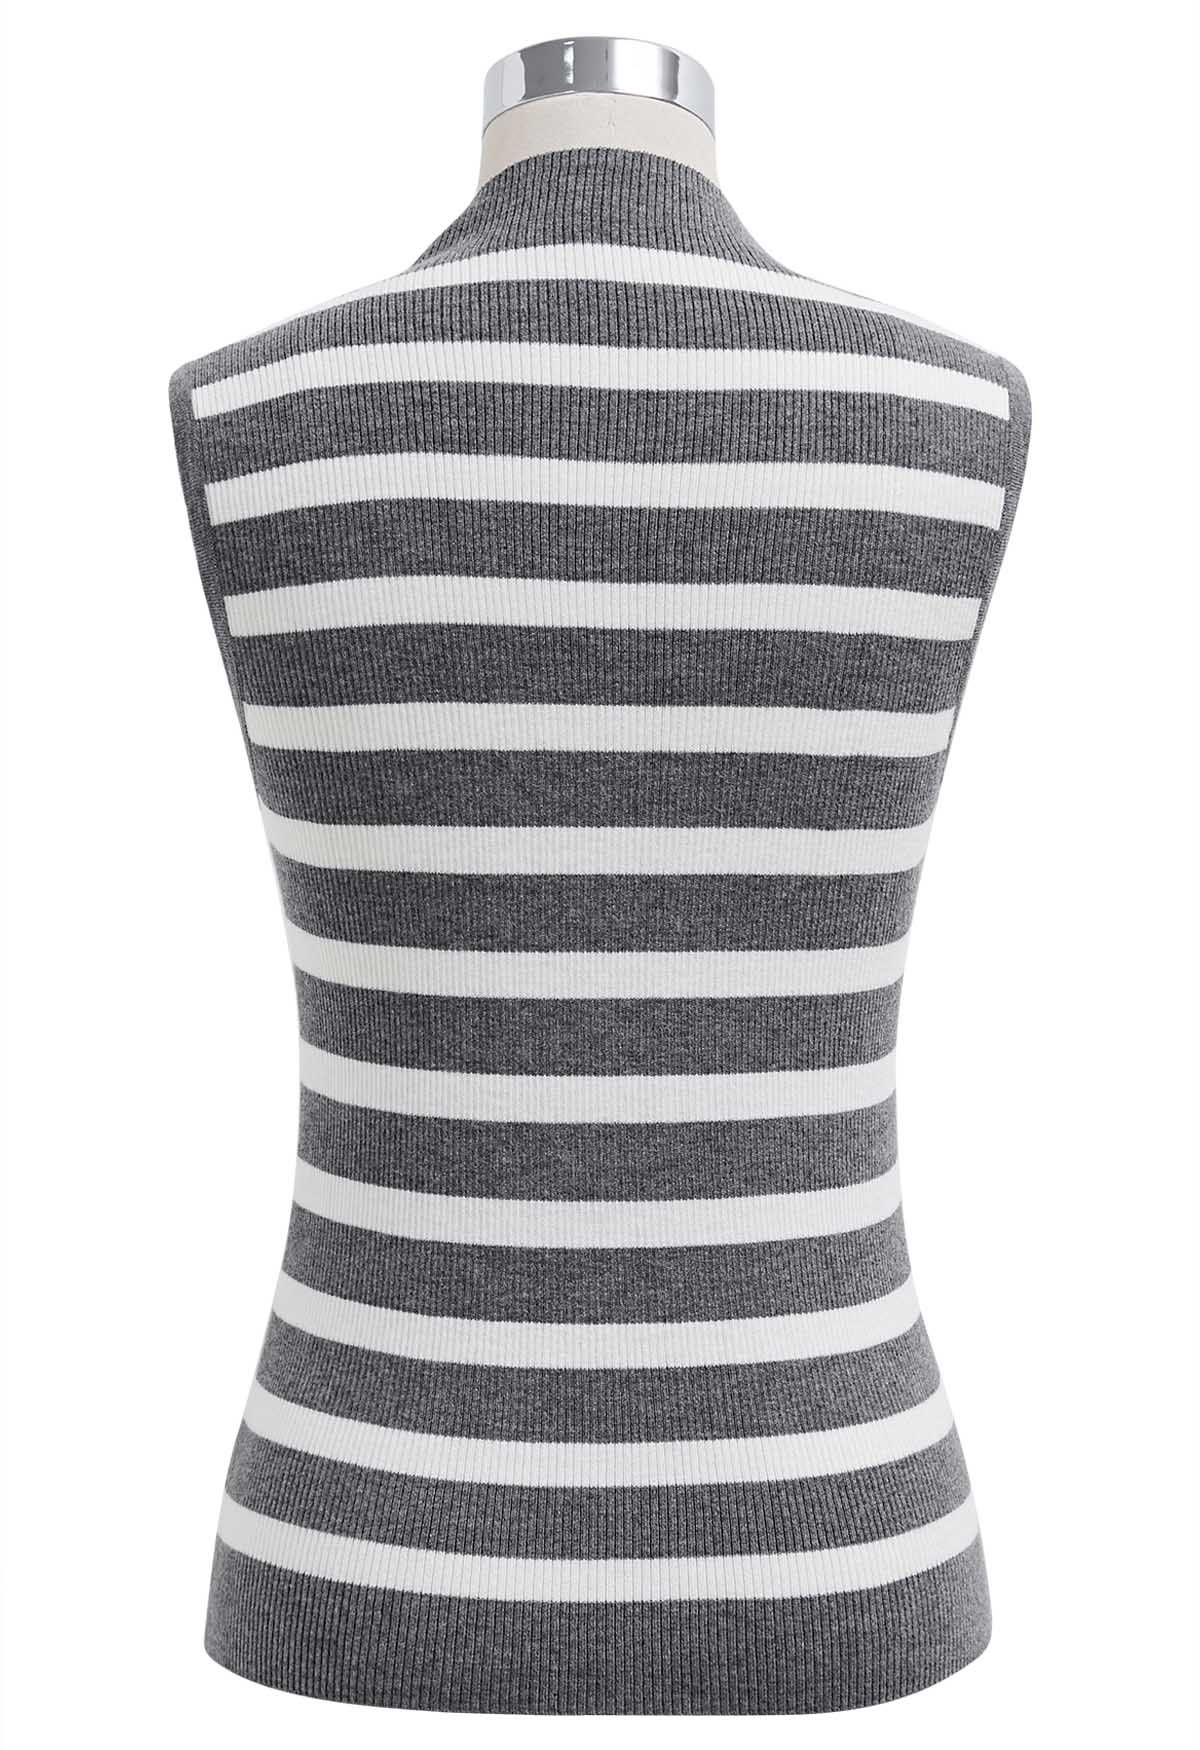 Contrast Stripe Sleeveless Knit Top in Grey